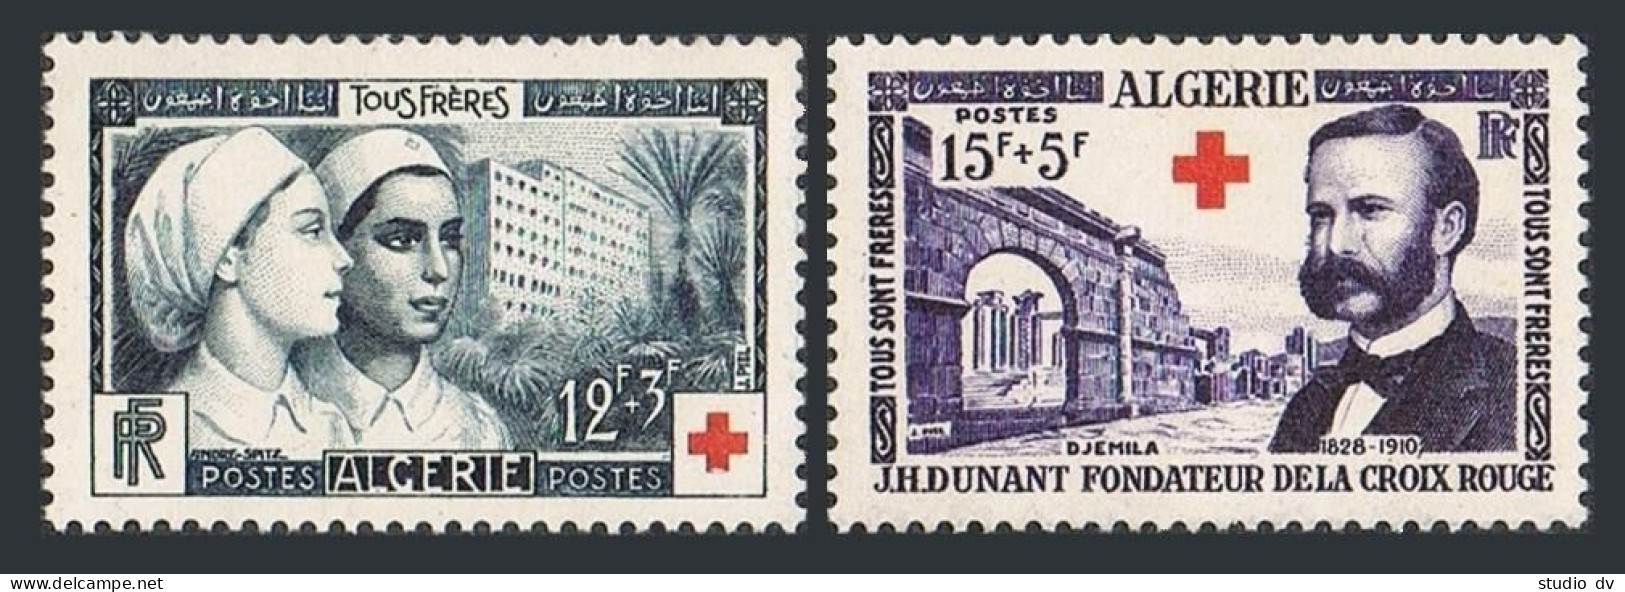 Algeria B74-B75,MNH.Michel 331-332. Red Cross 1954.Hospital,J.Dunant.Djemila. - Algeria (1962-...)